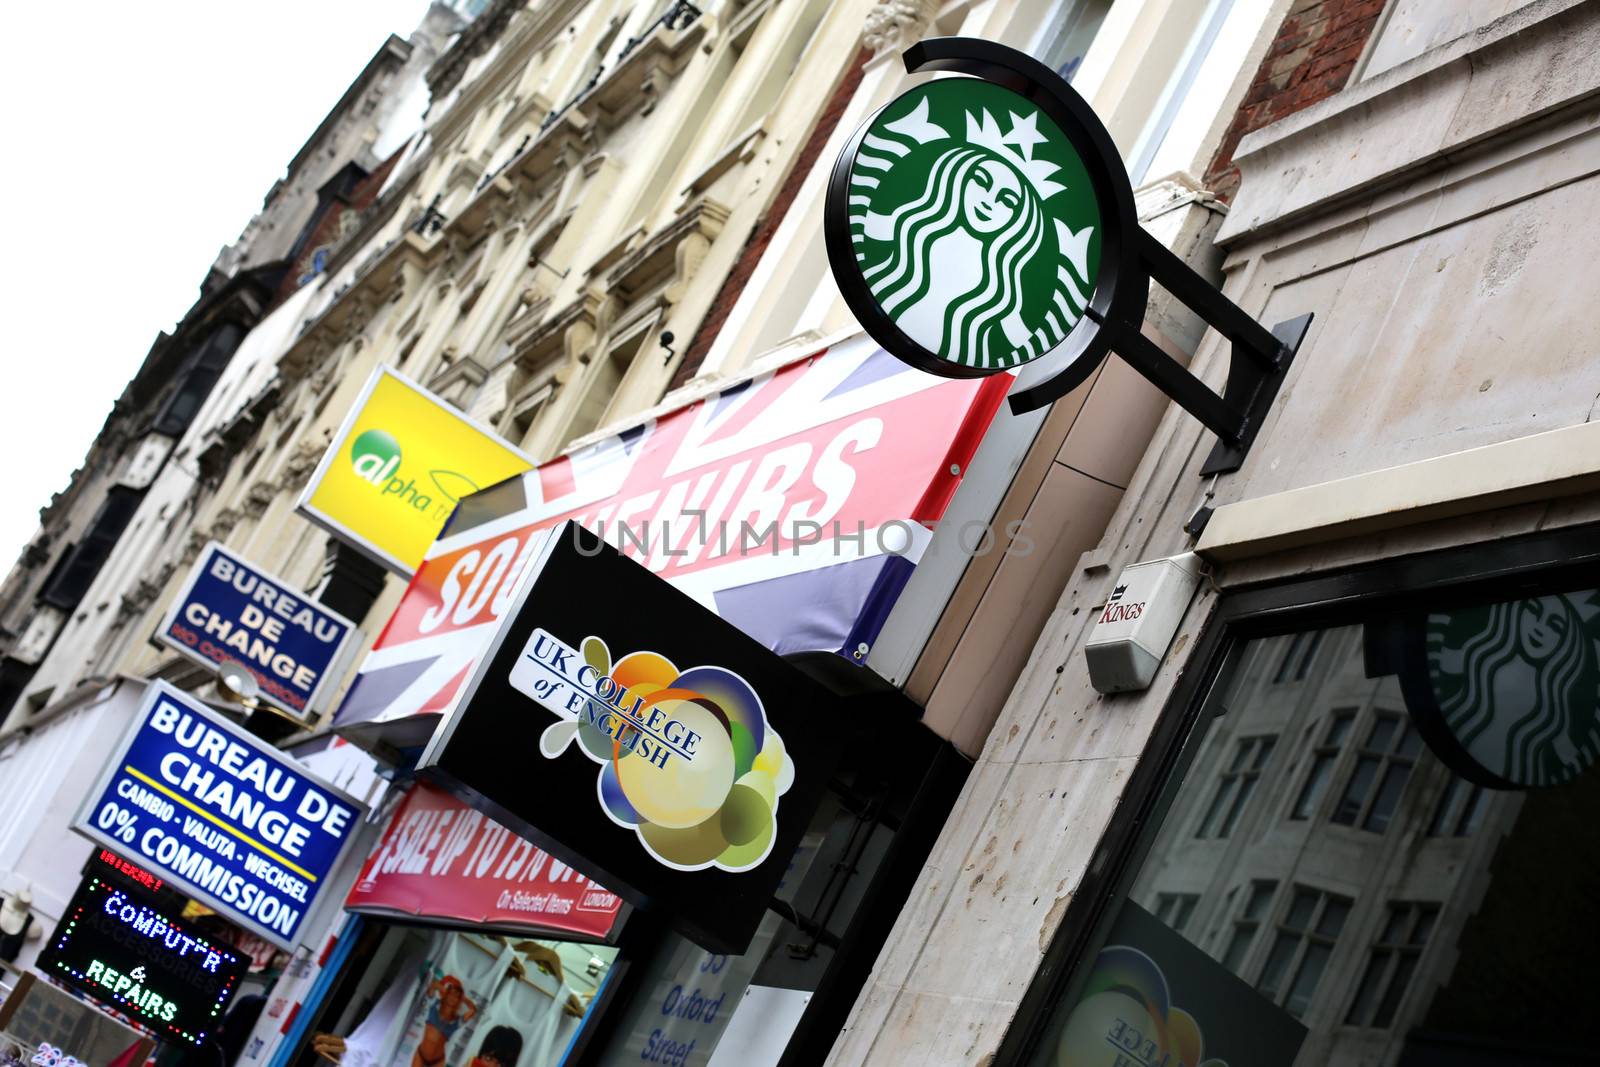 Starbuck Coffee Shop Oxford Street London by Whiteboxmedia